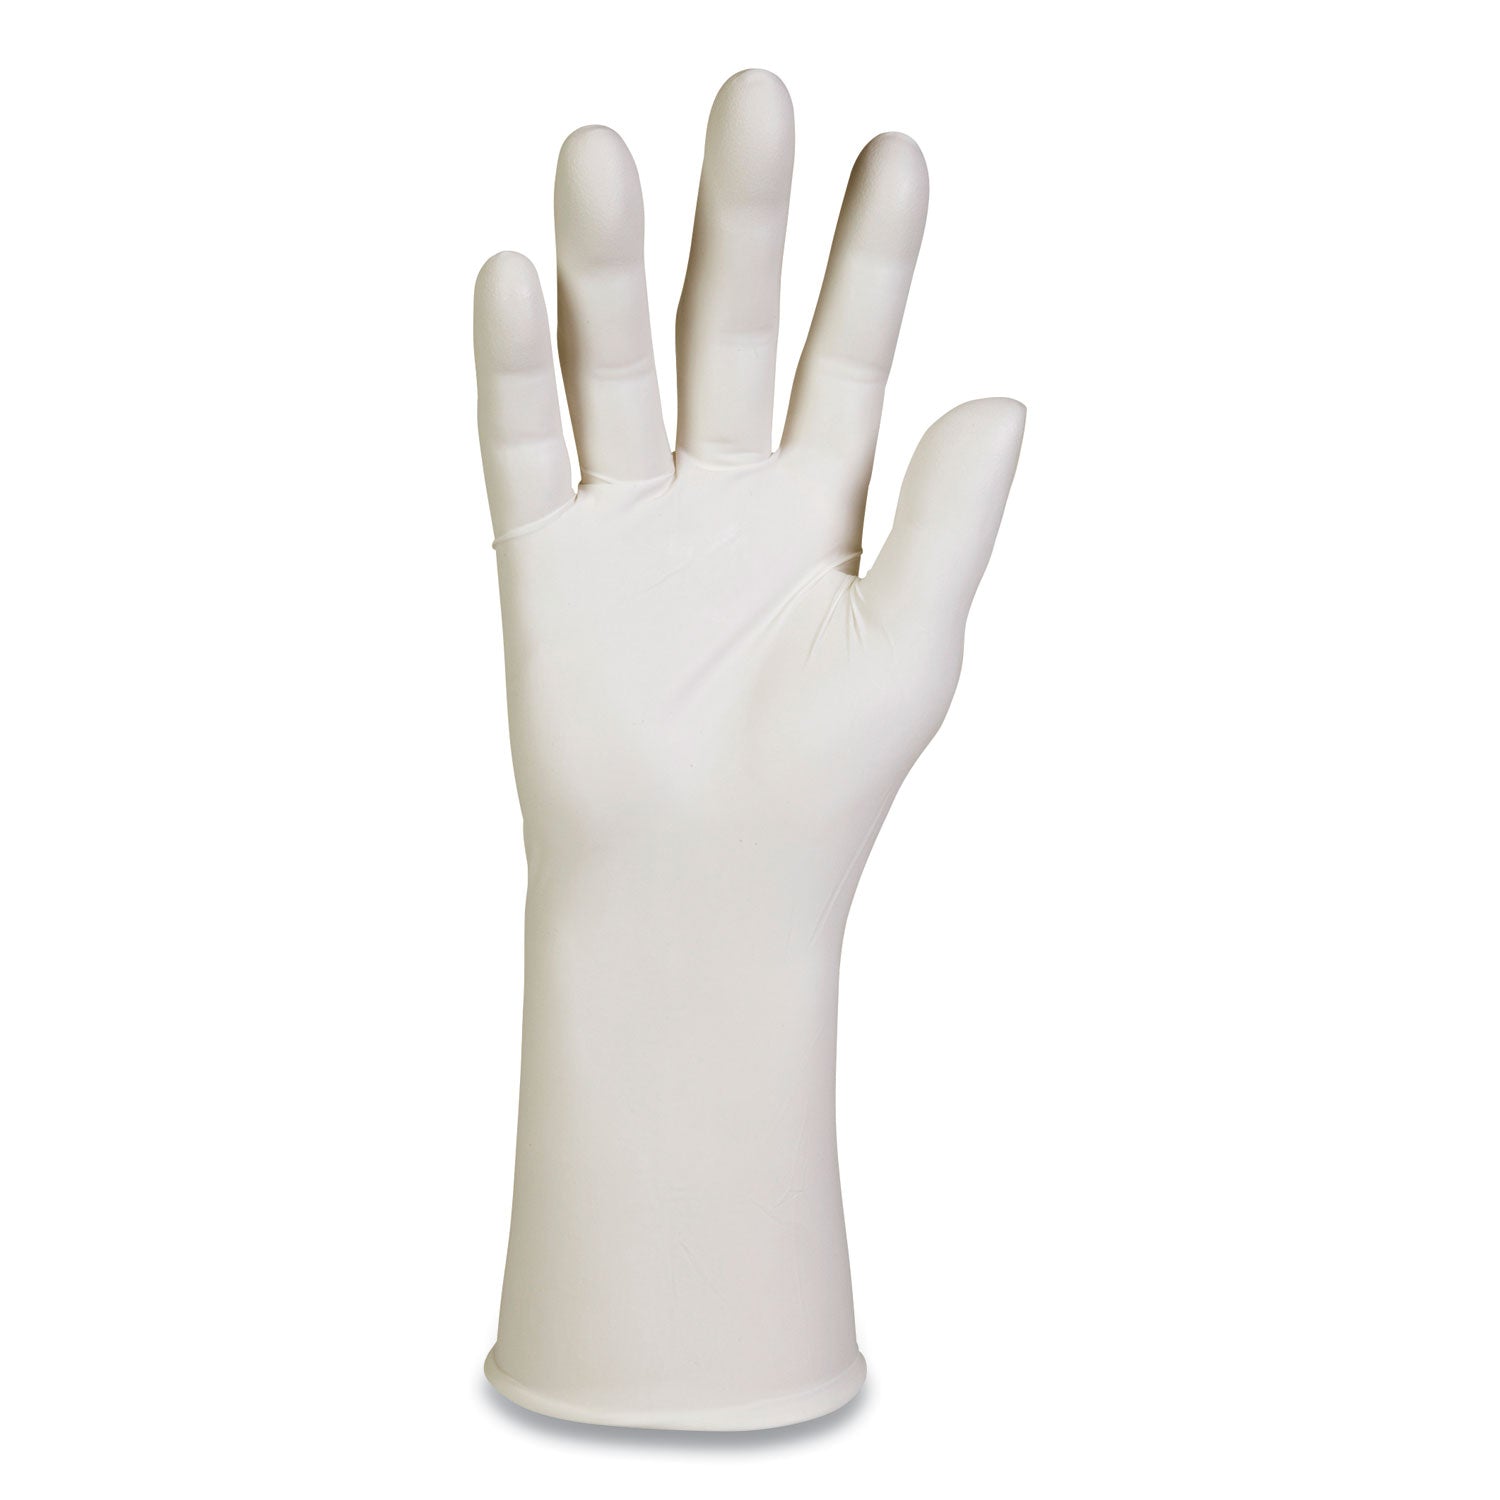 g3-nxt-nitrile-gloves-powder-free-305-mm-length-medium-white-1000-carton_kcc62992 - 1